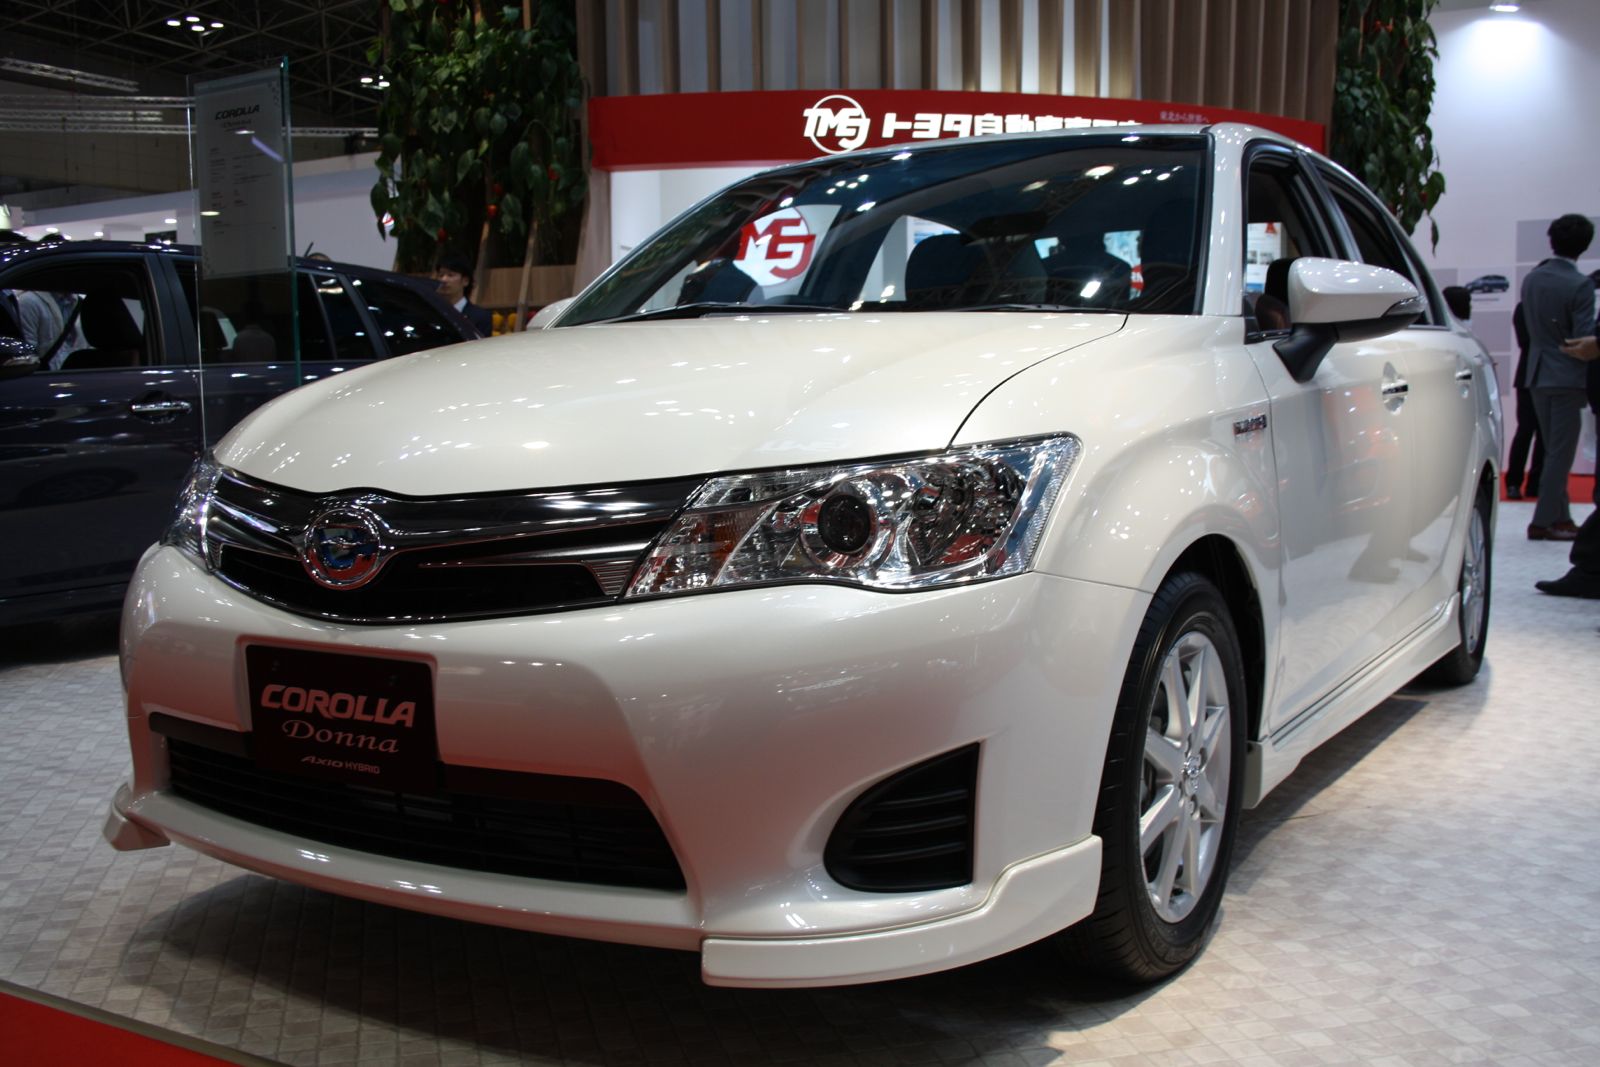 Toyota Corolla 2013 India Price